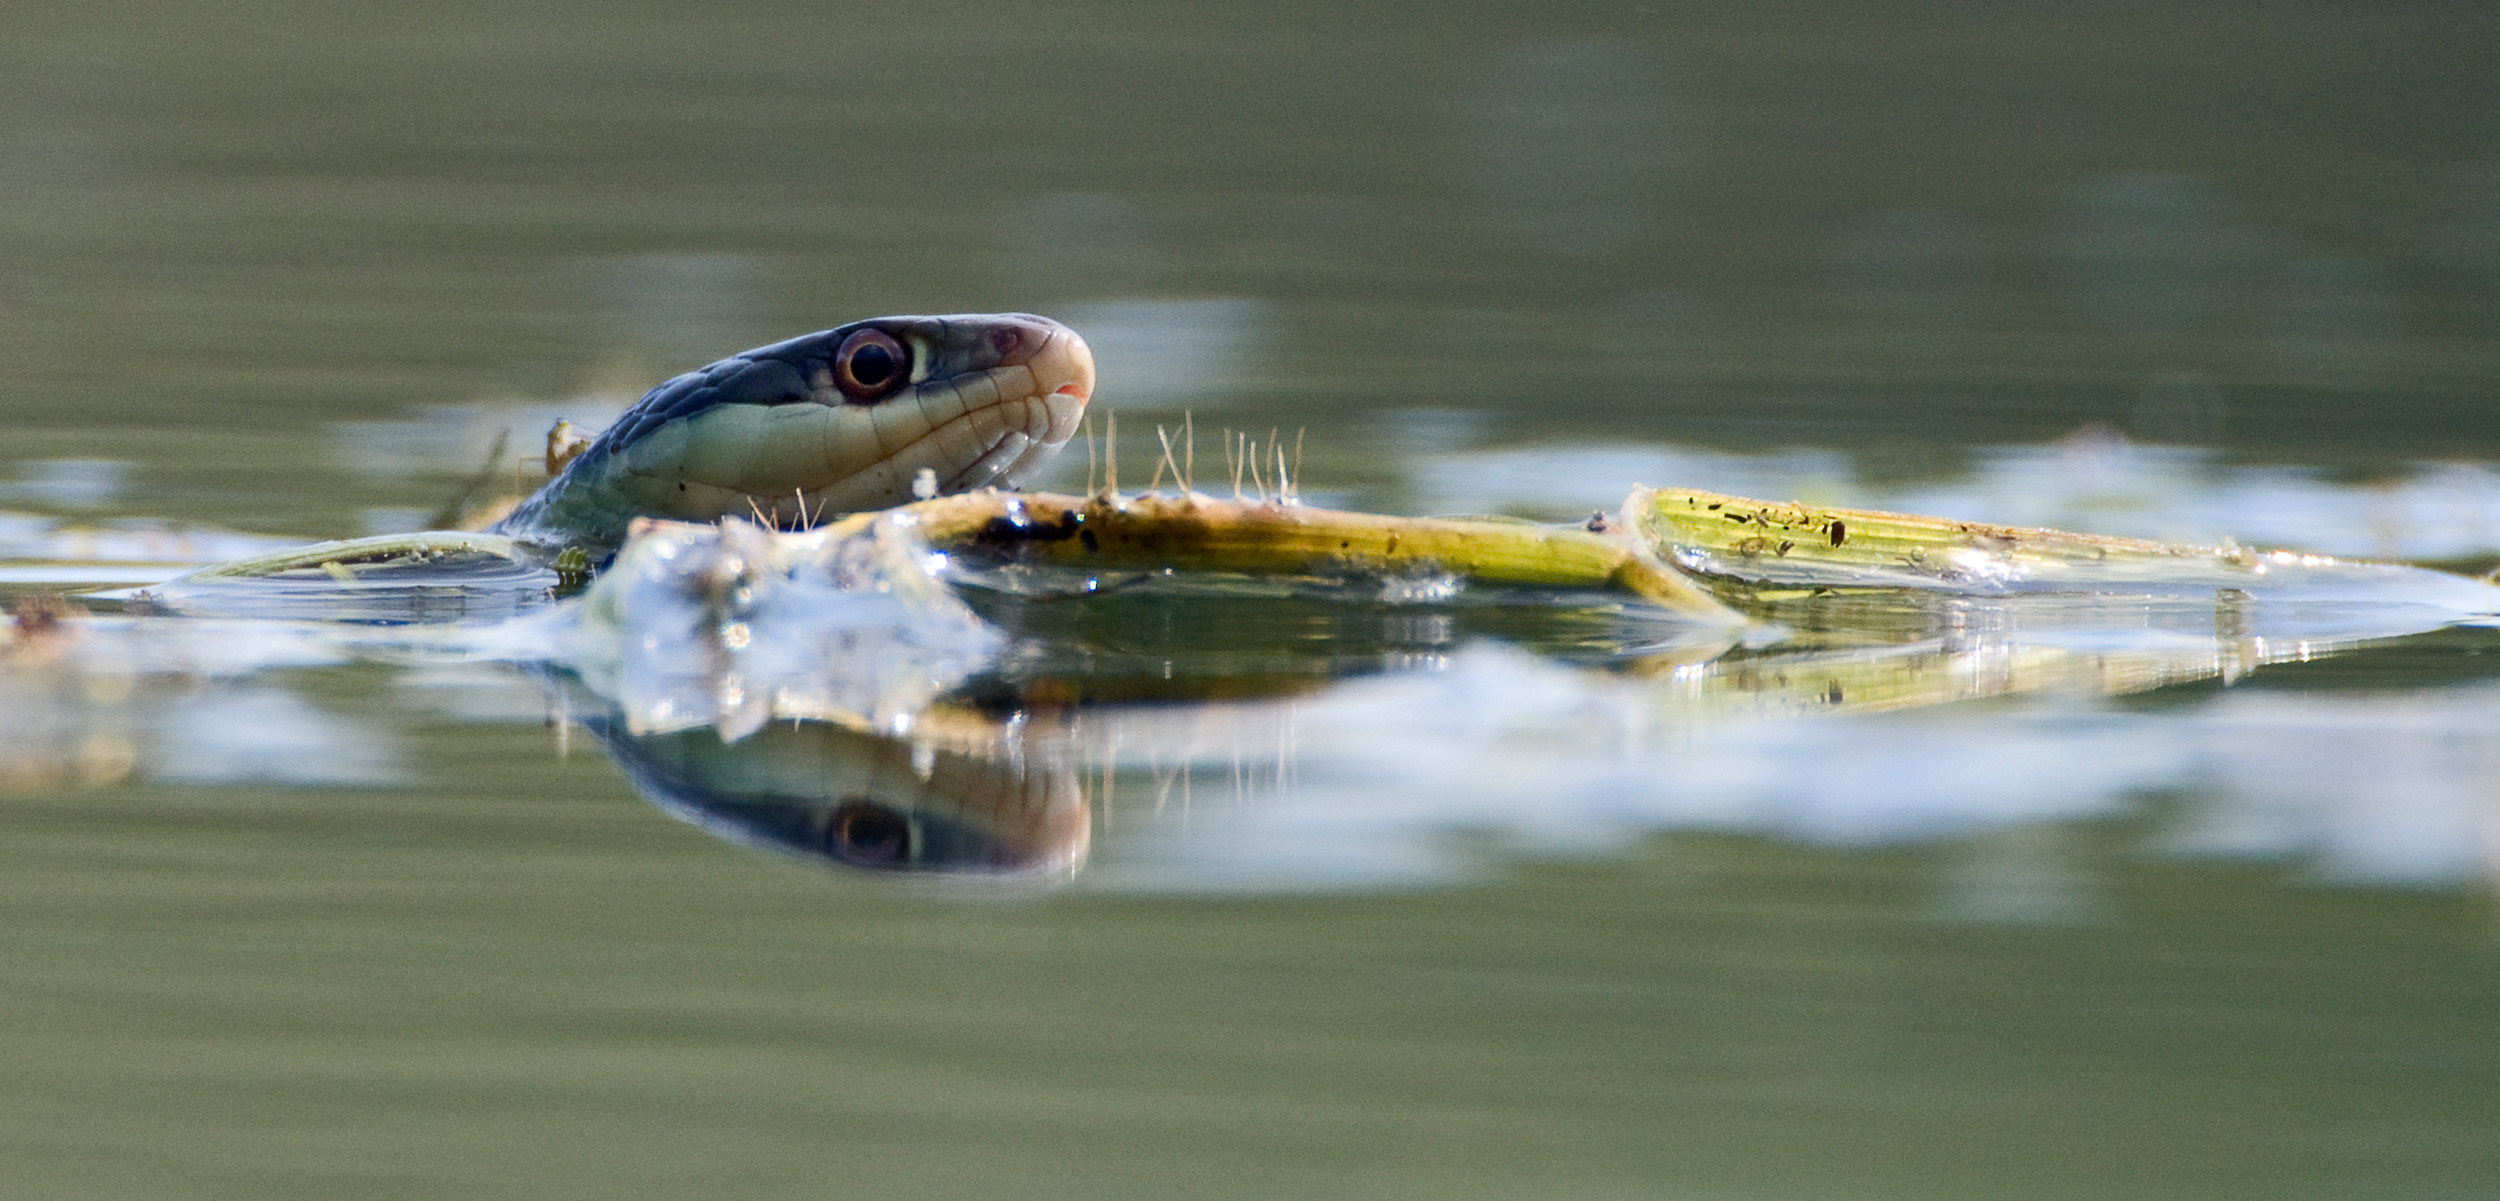 Yes, garter snakes can swim. Photo by Marcel van Kammen/NiS/Minden Pictures